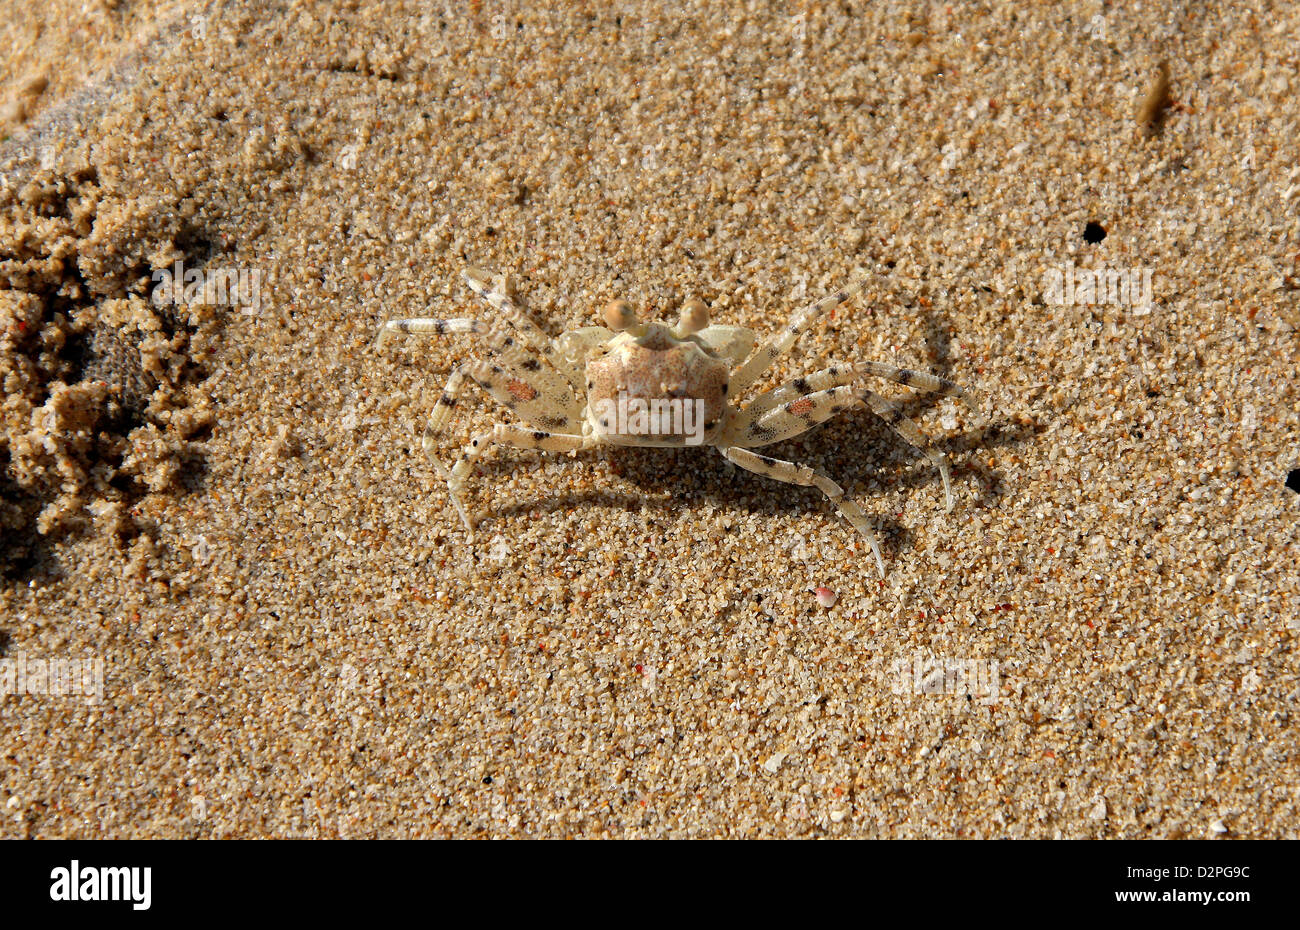 Joven Cangrejo fantasma pálido que utiliza la arena para camuflaje, Ocypode pallidula, Ocypodidae, Decapoda, crustáceos. Foto de stock